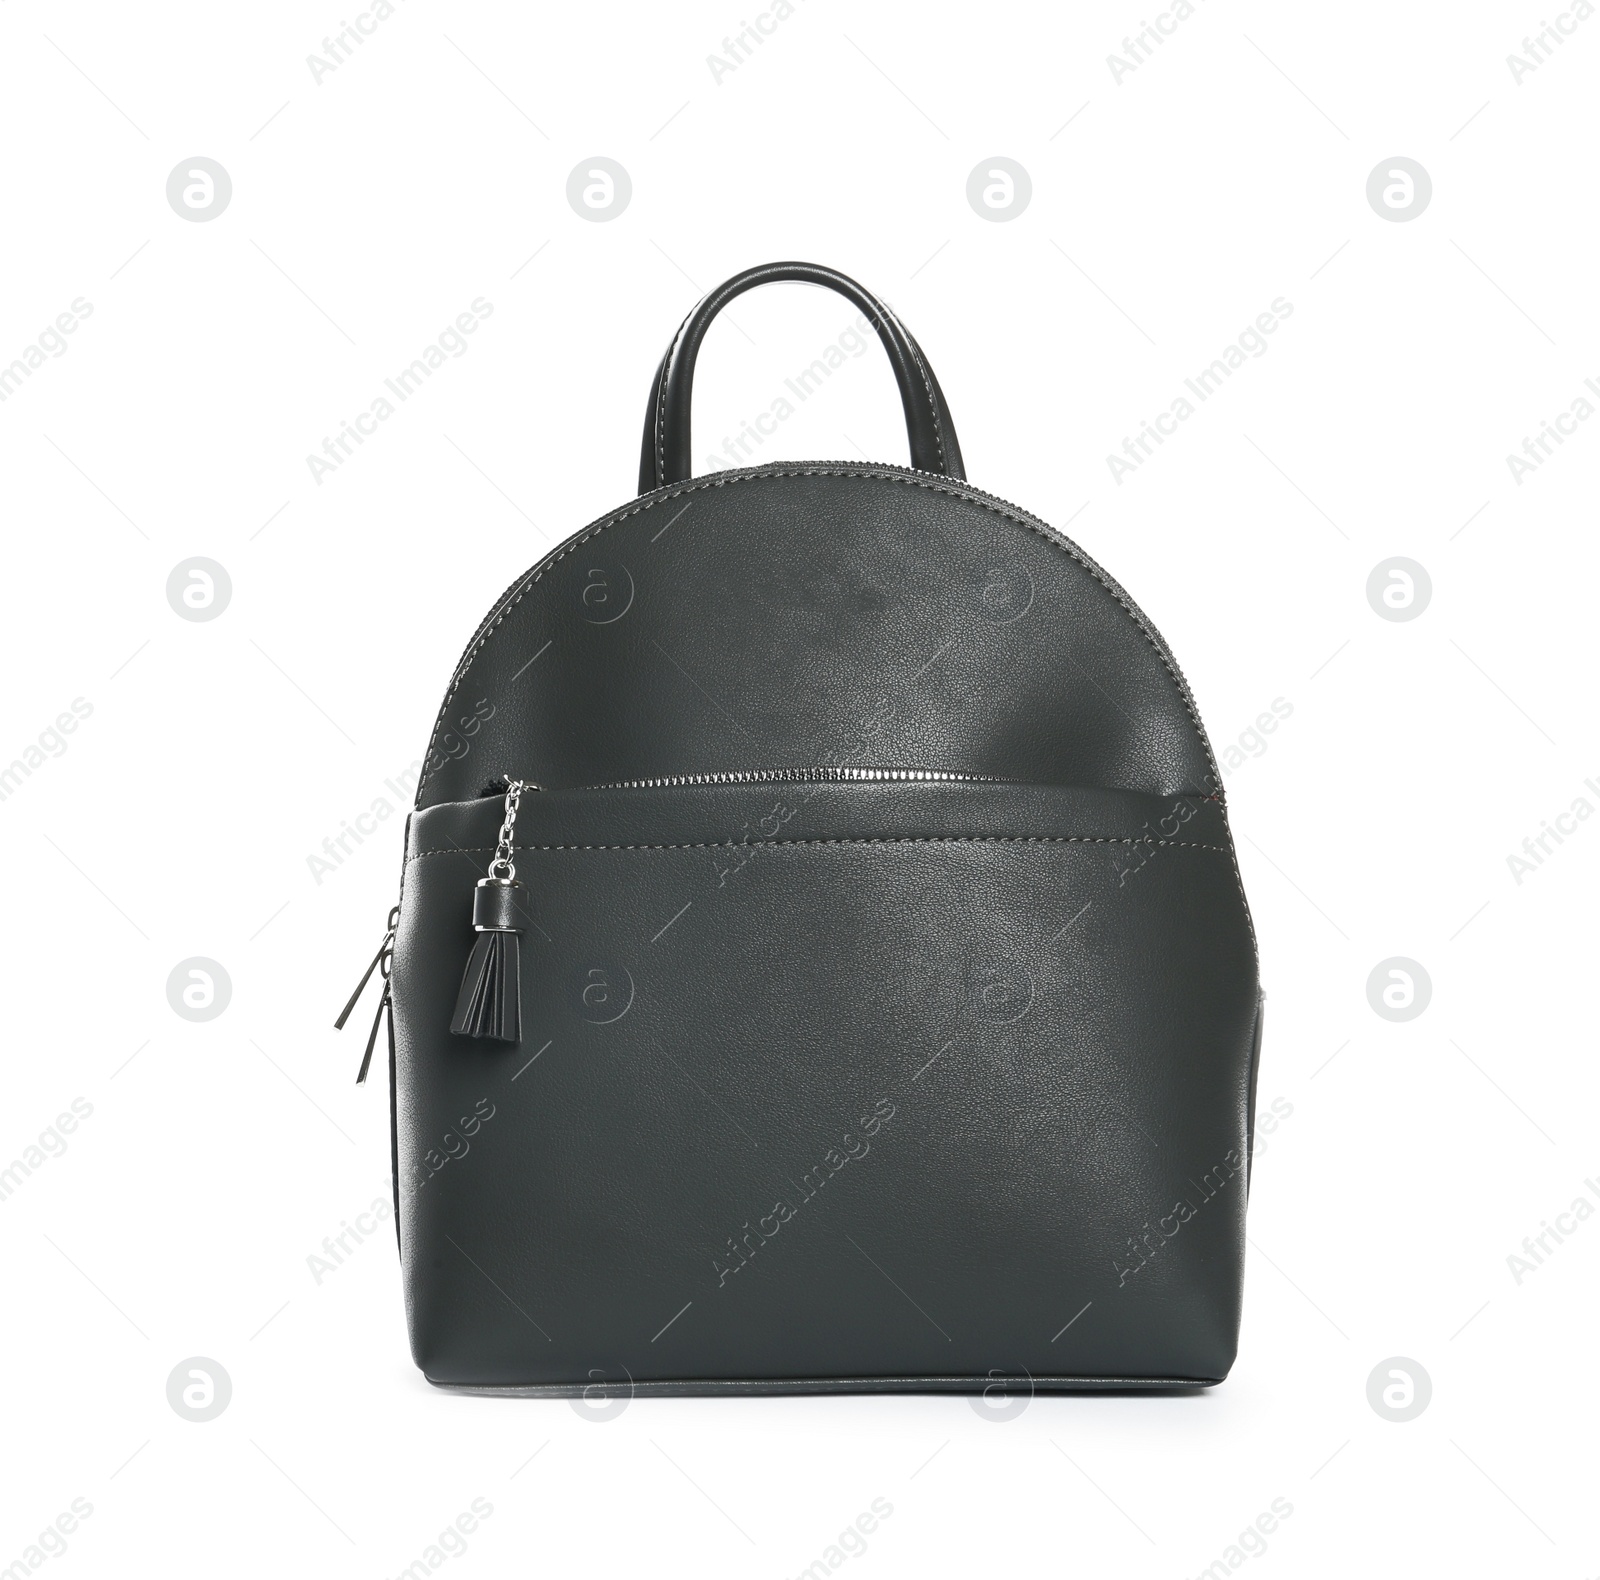 Photo of Black women's backpack isolated on white. Stylish accessory